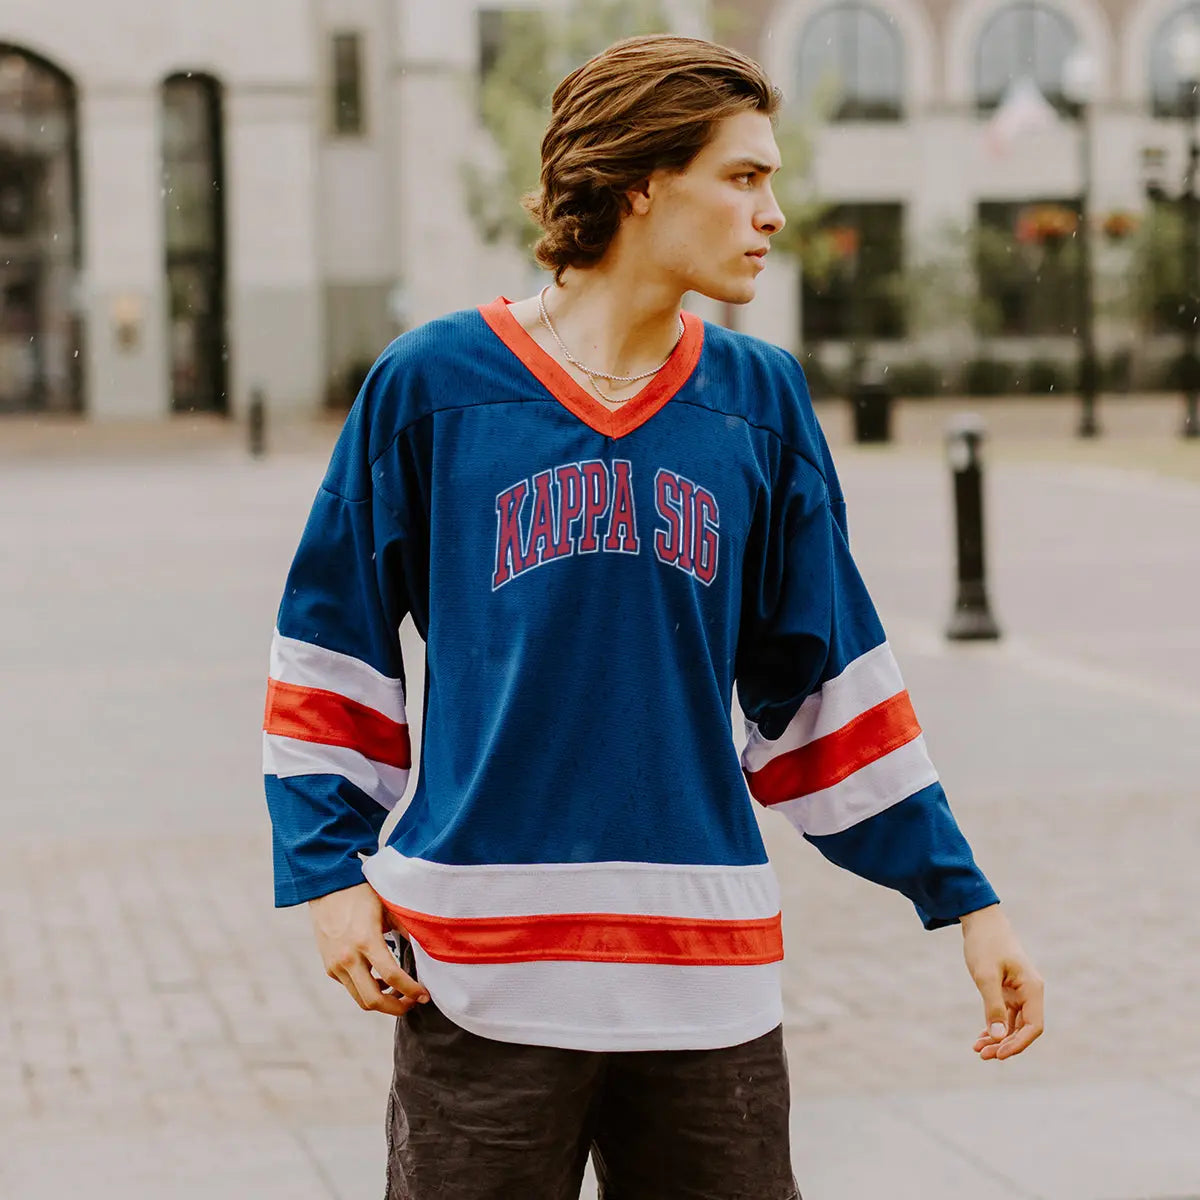 Kappa Sig Personalized Patriotic Hockey Jersey - Kappa Sigma Official Store